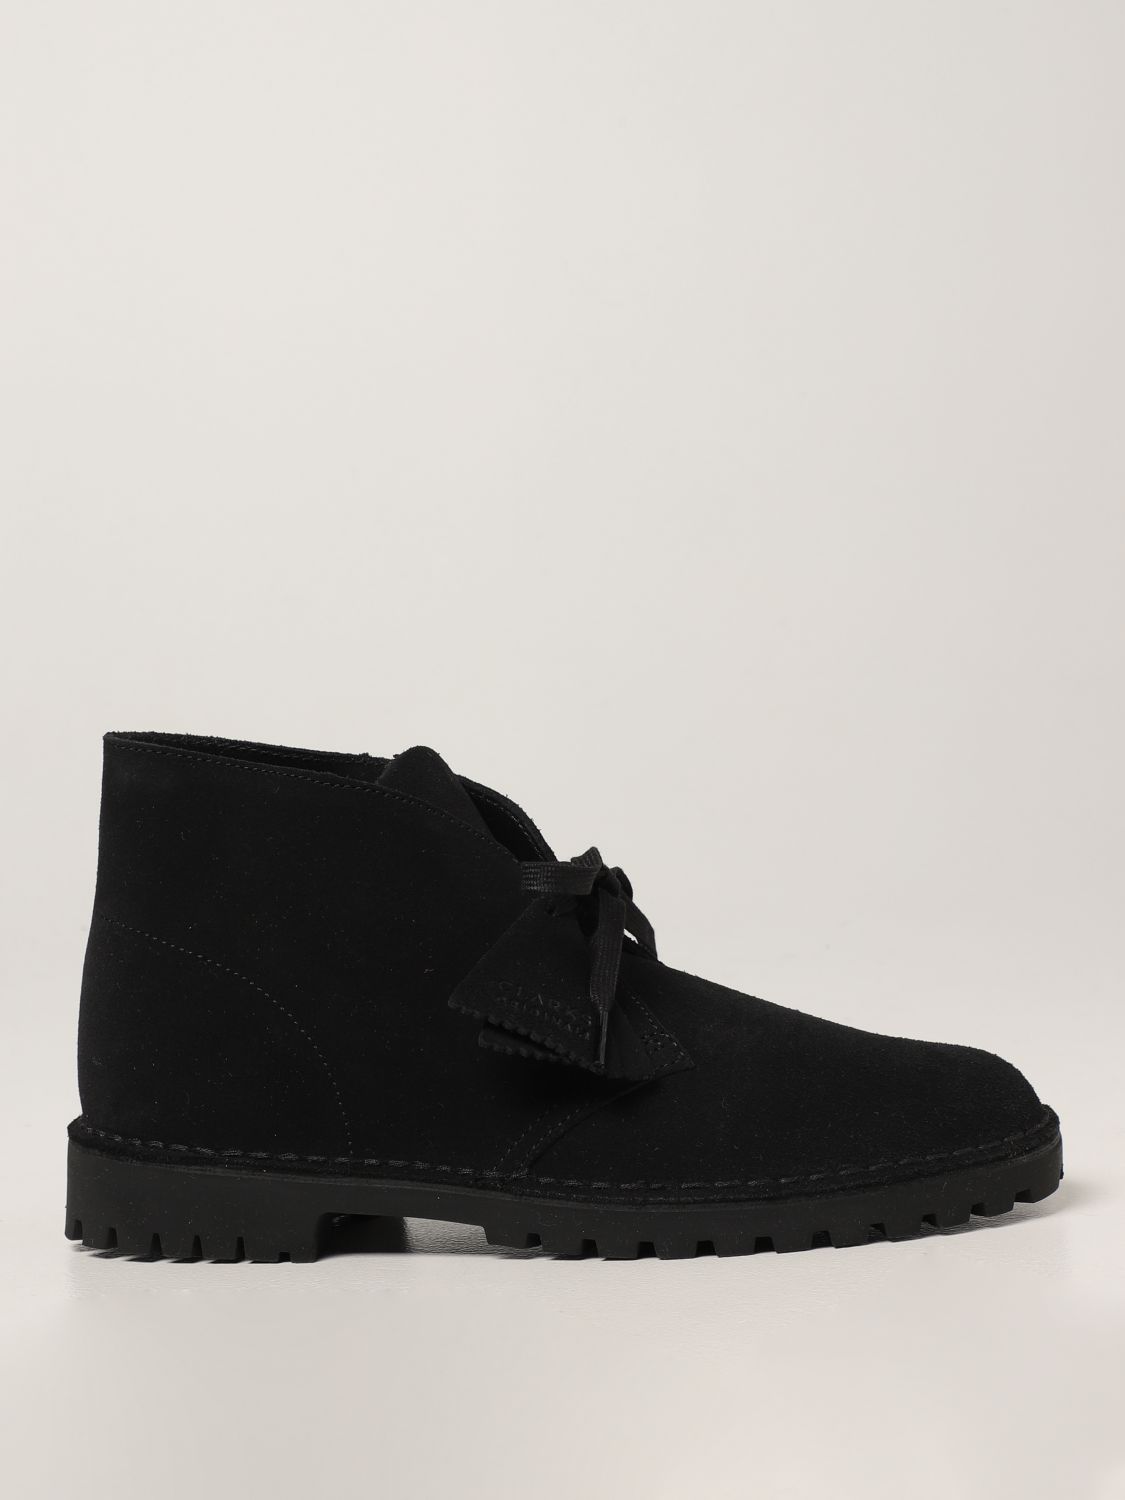 CLARKS: Desert Rock Originals ankle boots in suede - Black | Clarks boots 162705 online on GIGLIO.COM